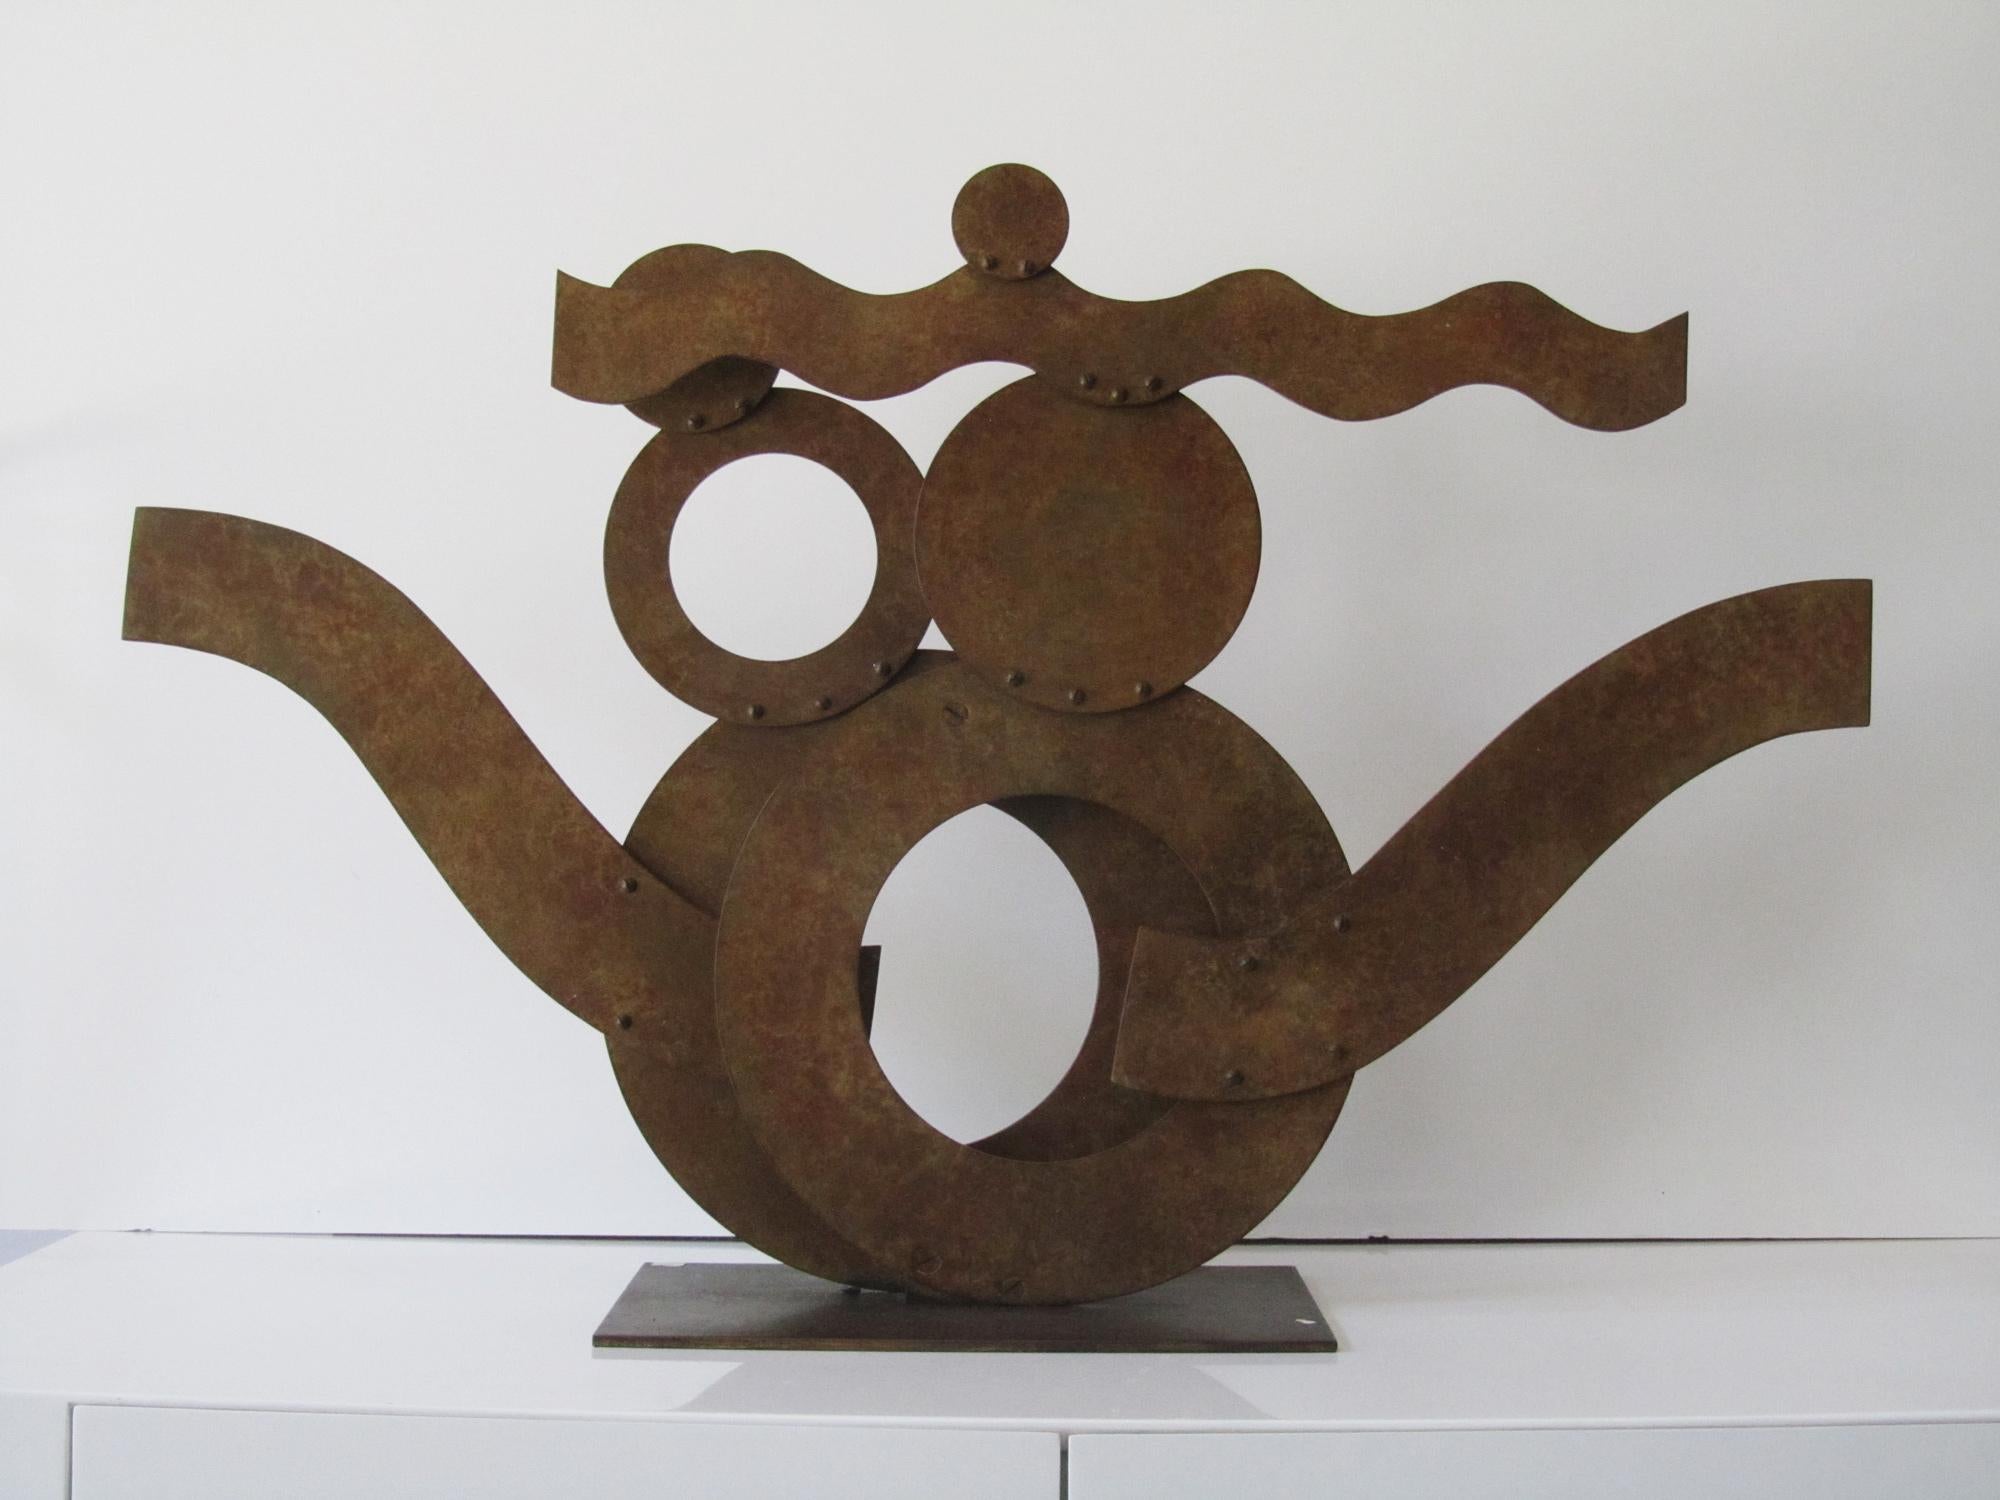 Hans Van de Bovenkamp Abstract Sculpture – "Kreise und Wellen" abstrakte Bronzeskulptur 